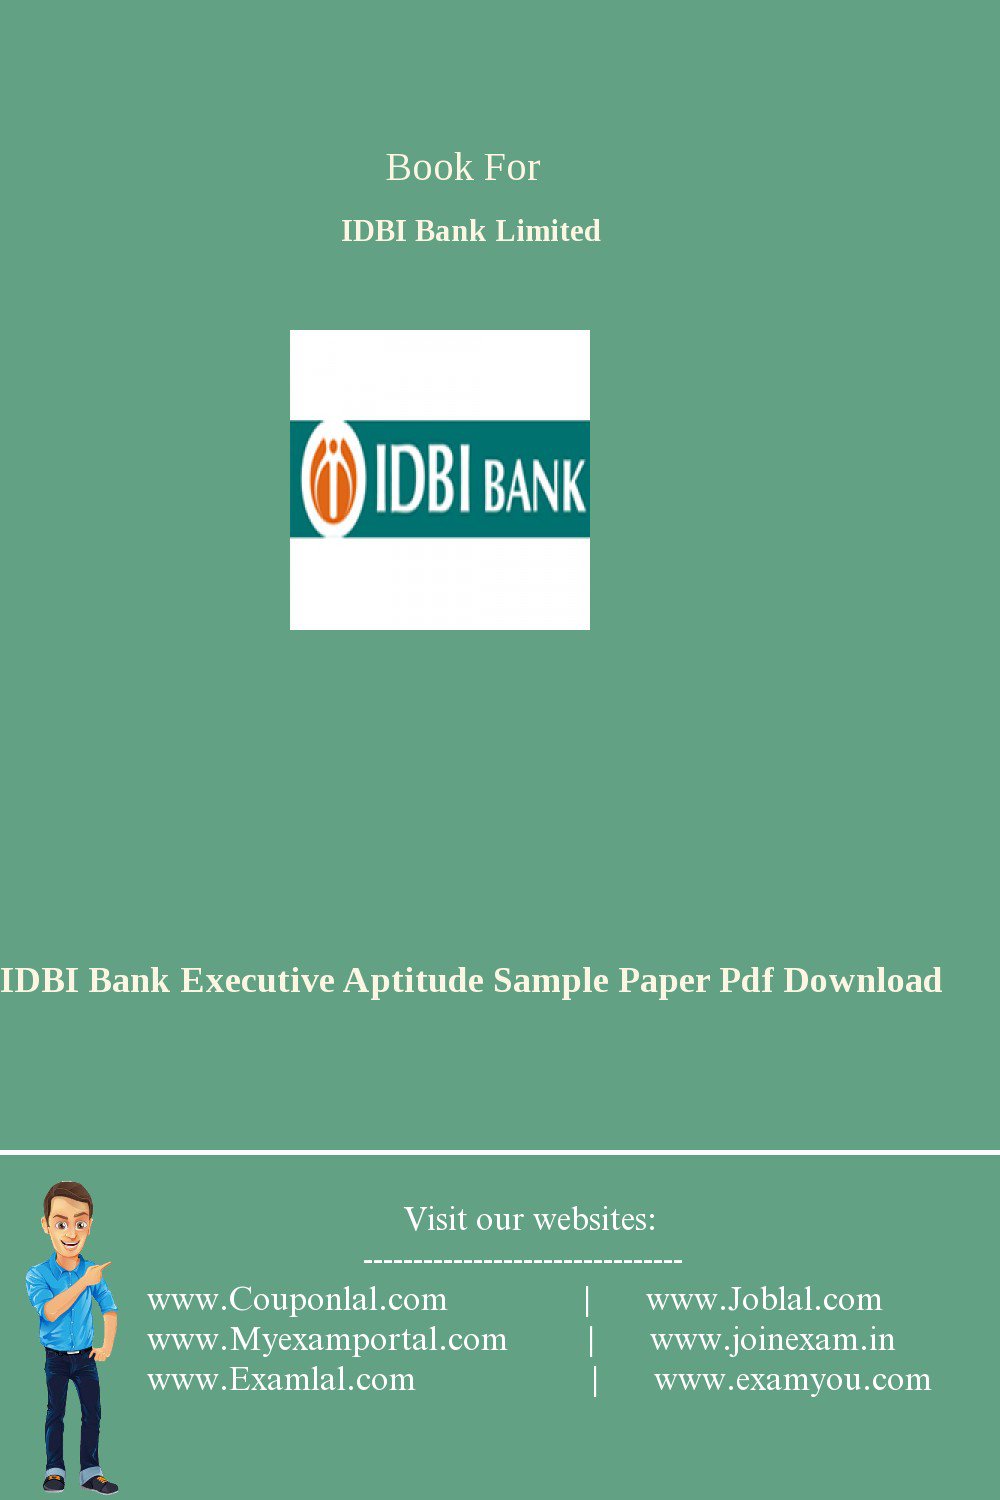 idbi-bank-executive-aptitude-sample-paper-2017-pdf-download-for-main-exam-examyou